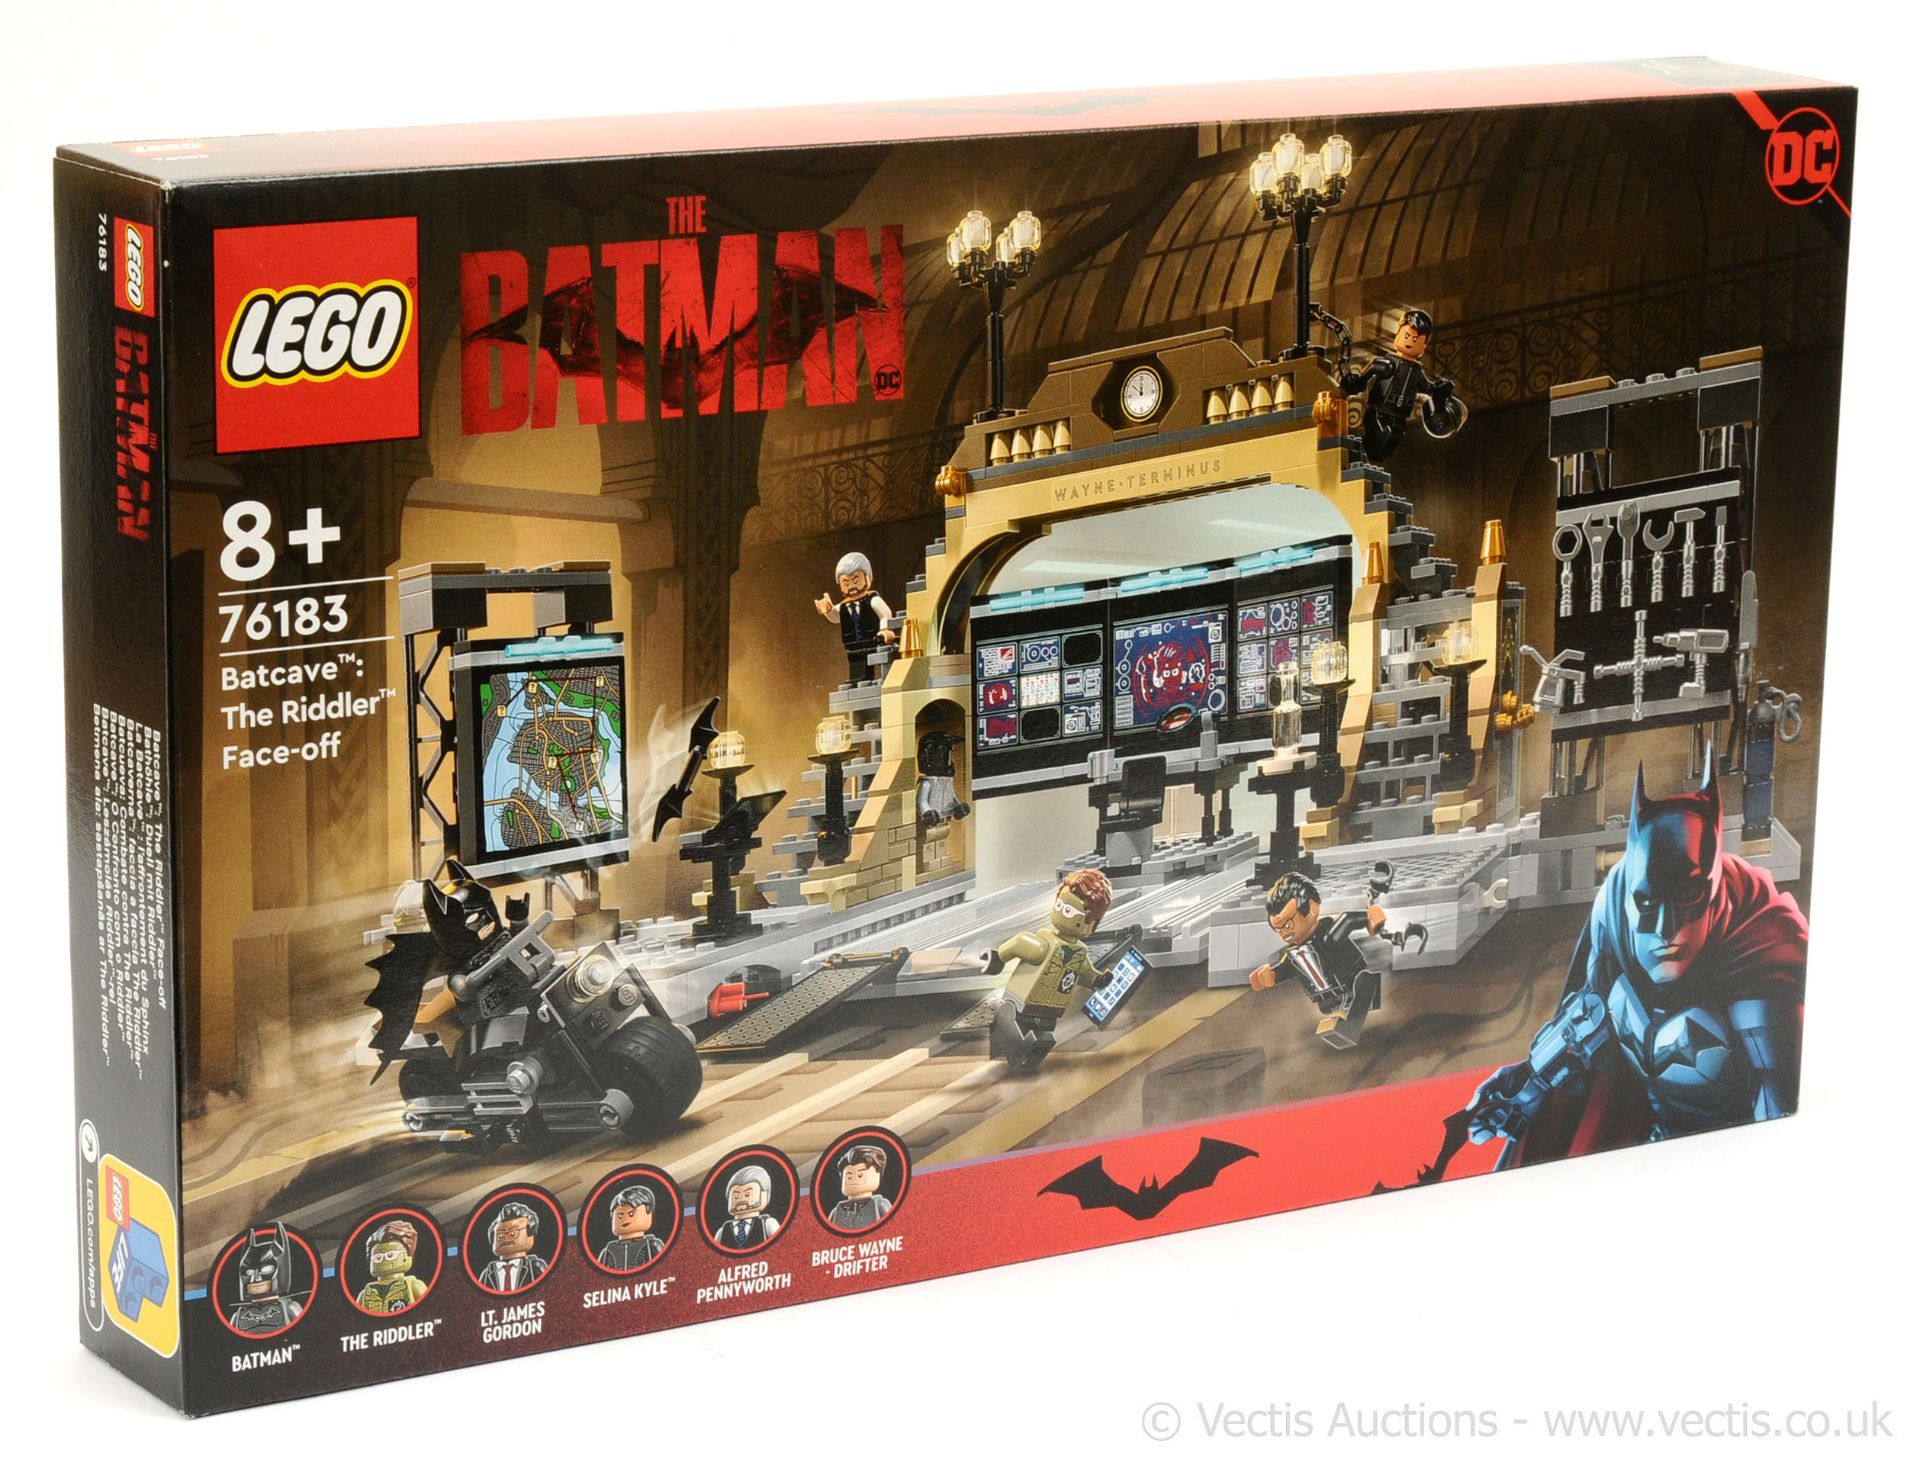 Lego The Batman Batcave: The Riddler Face-off